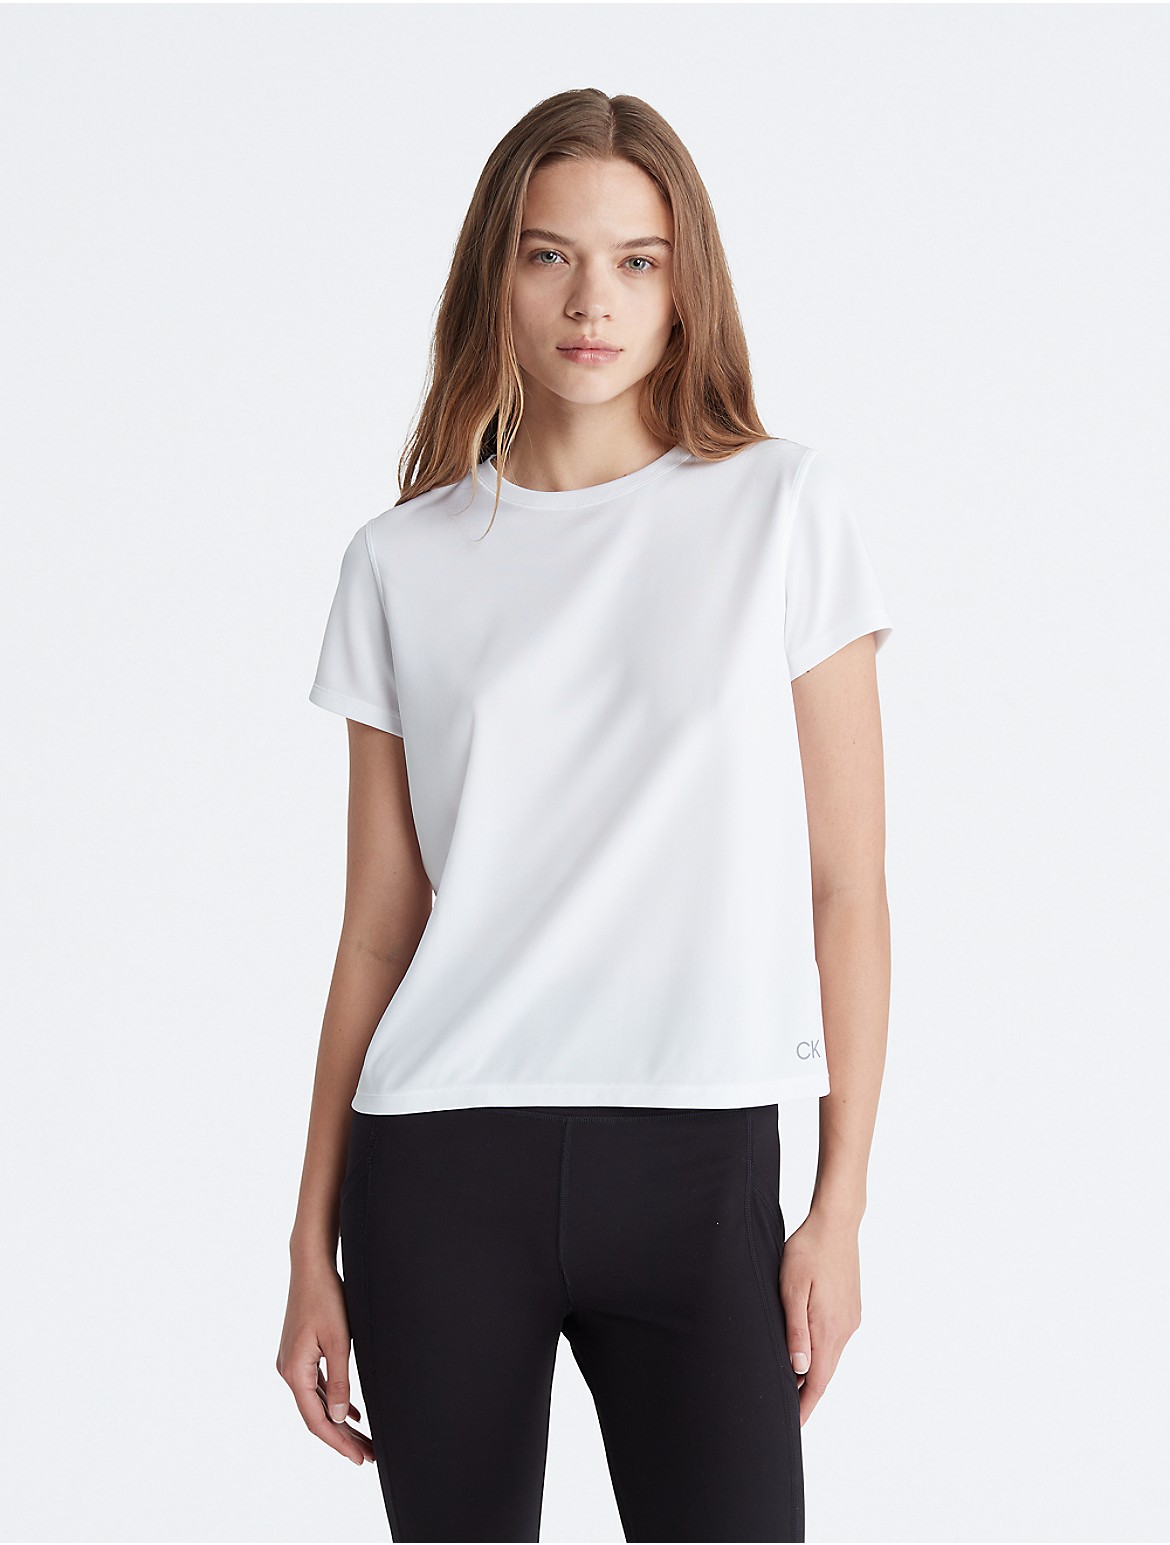 Calvin Klein Women's Performance Tech Pique T-Shirt - White - XL